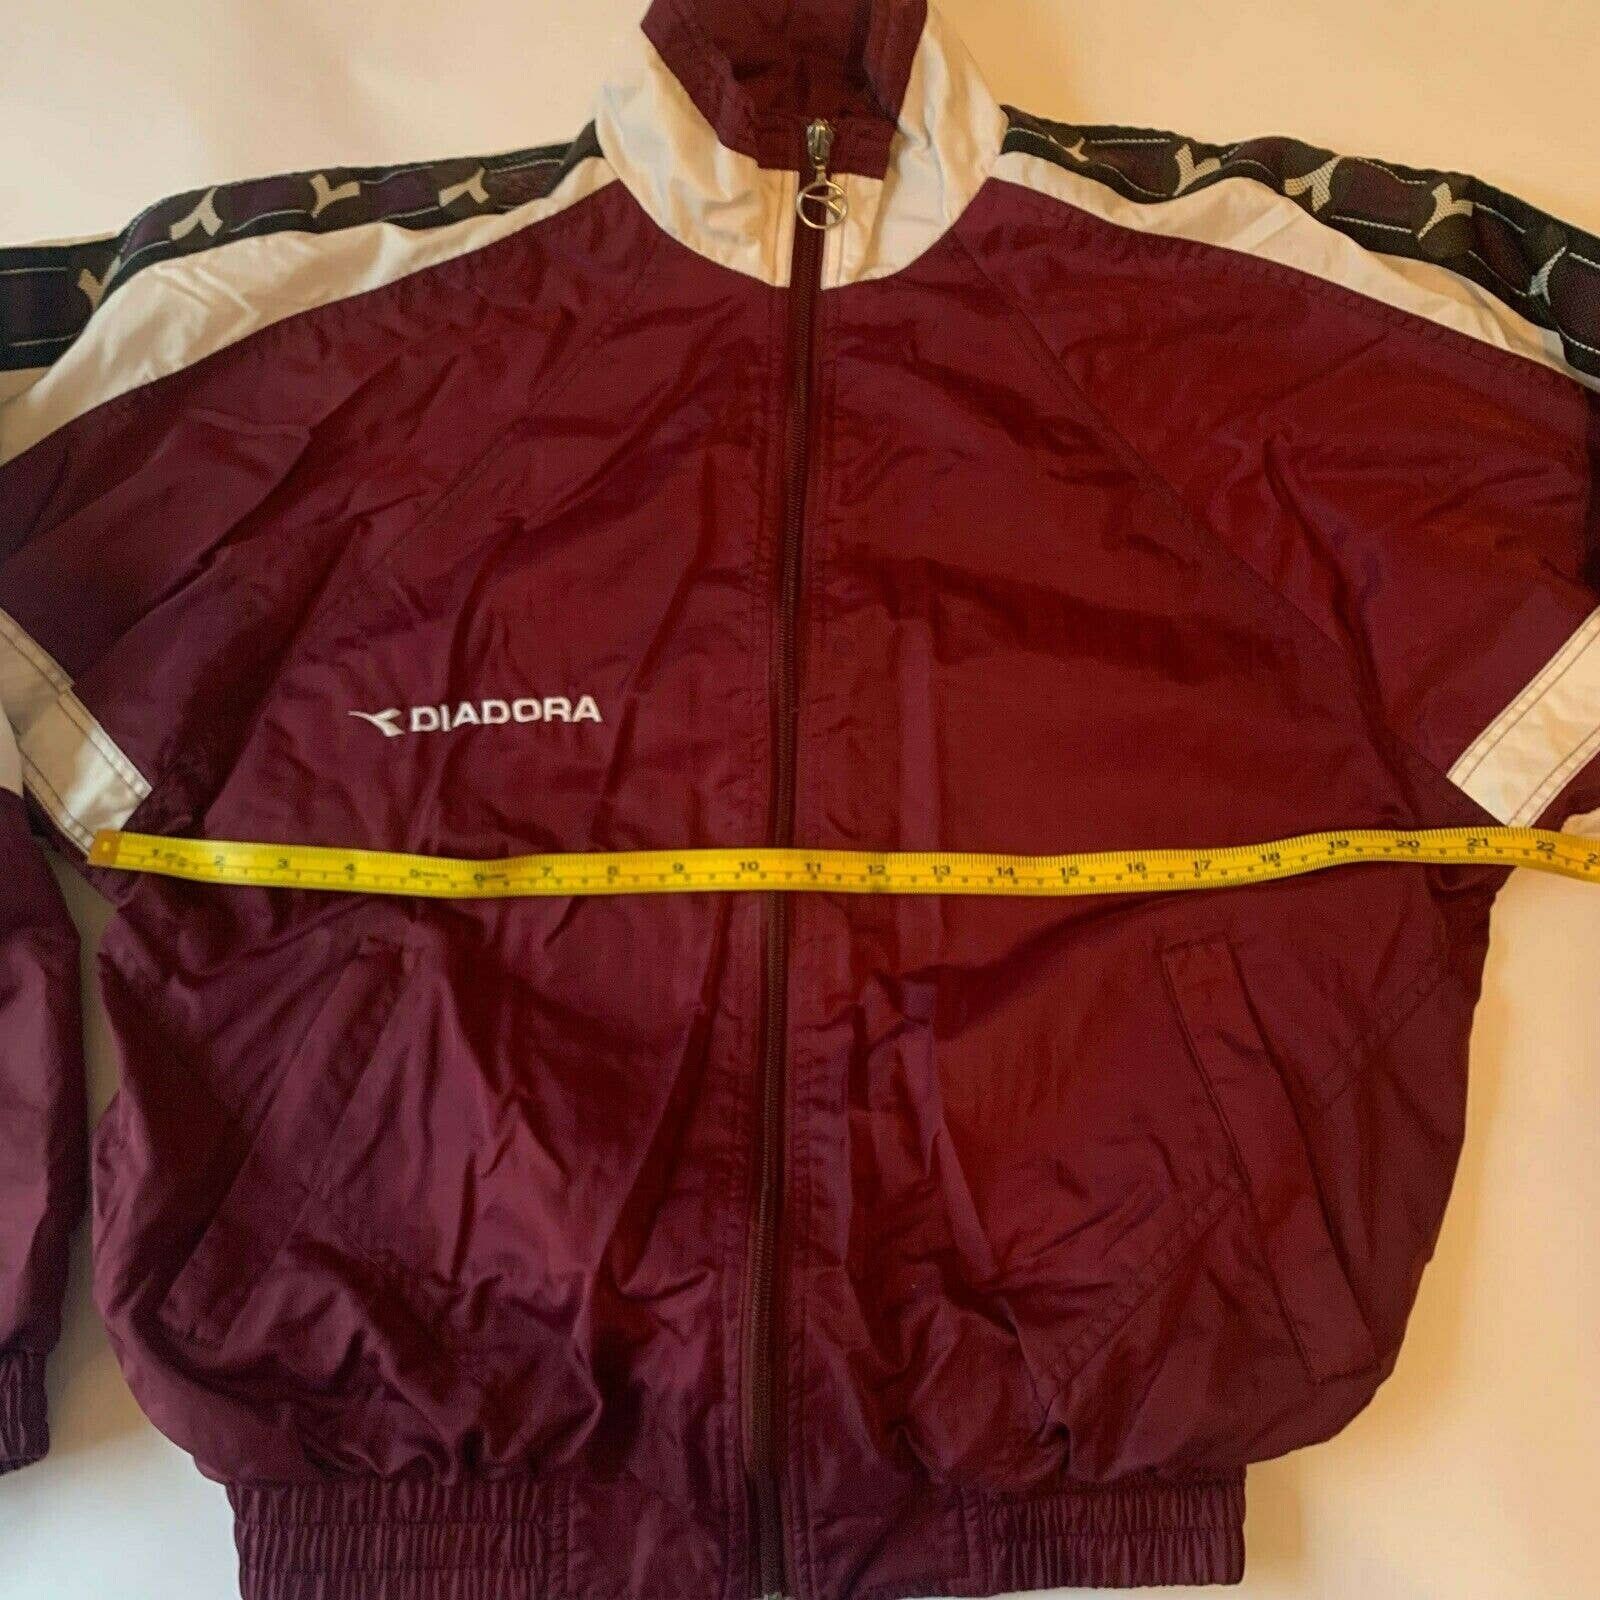 Diadora DIADORA Vintage 1980s 90s Tracksuit Jacket Top Size US S / EU 44-46 / 1 - 4 Thumbnail